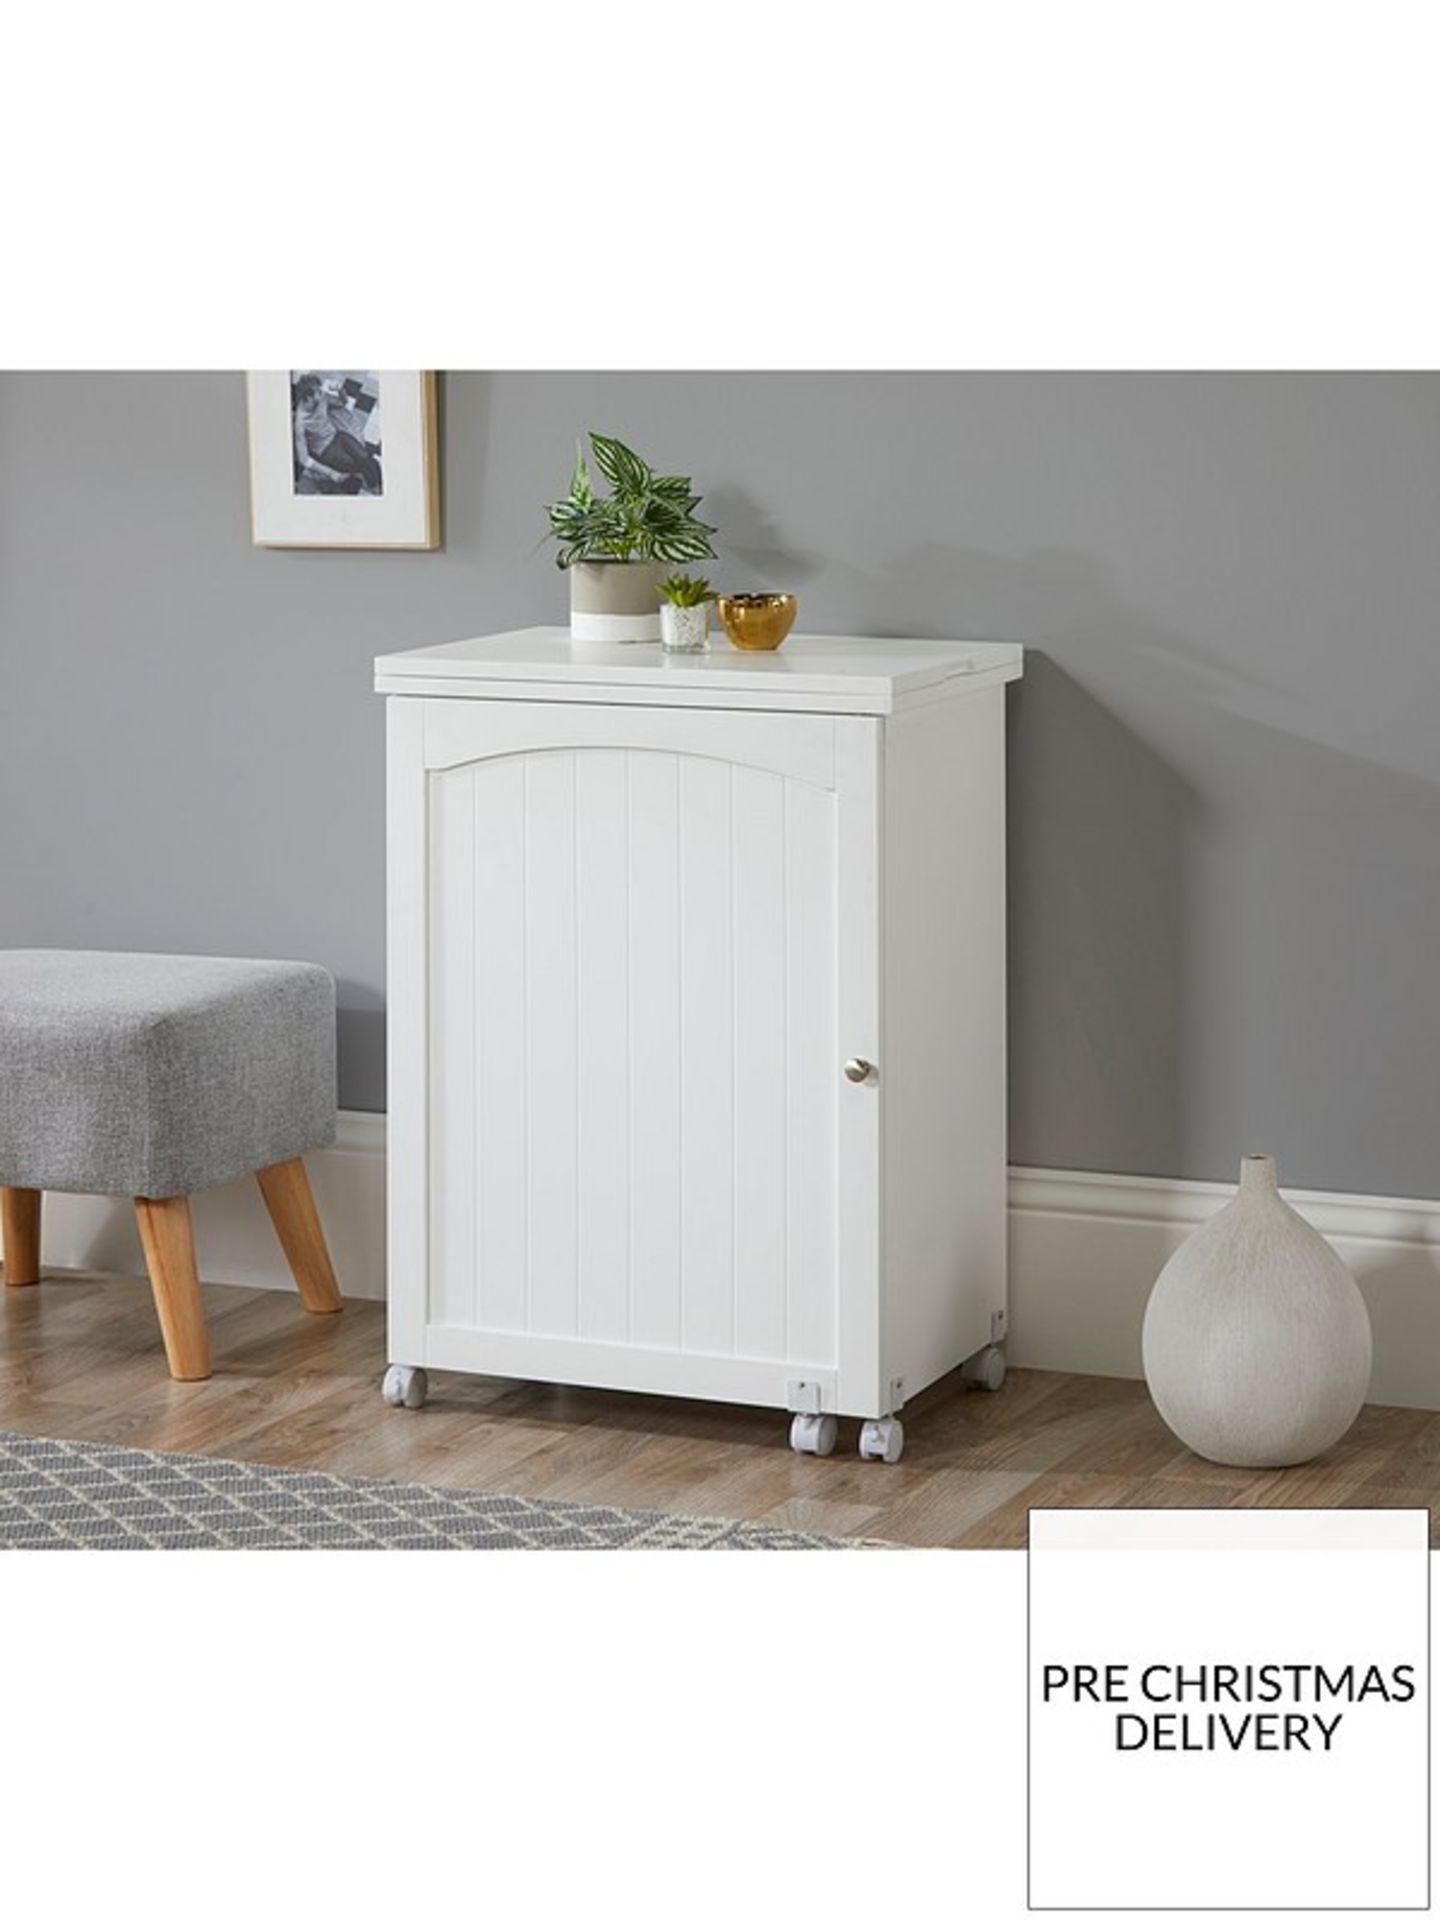 Lloyd Pascal Craft Desk (large), White. RRP £99